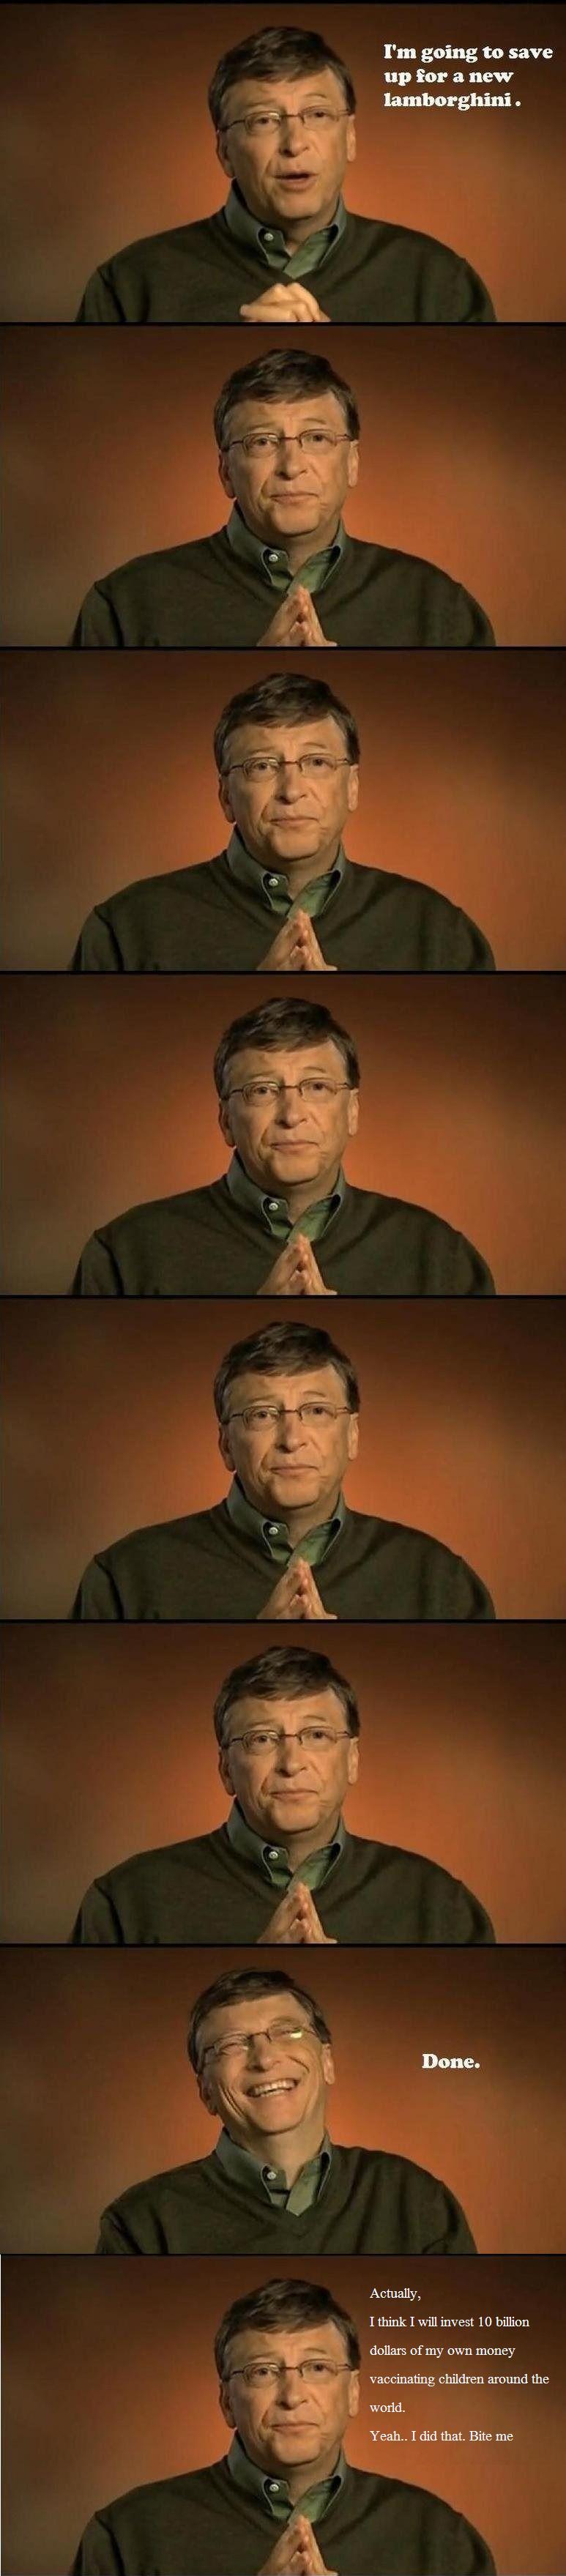 Good guy Bill Gates